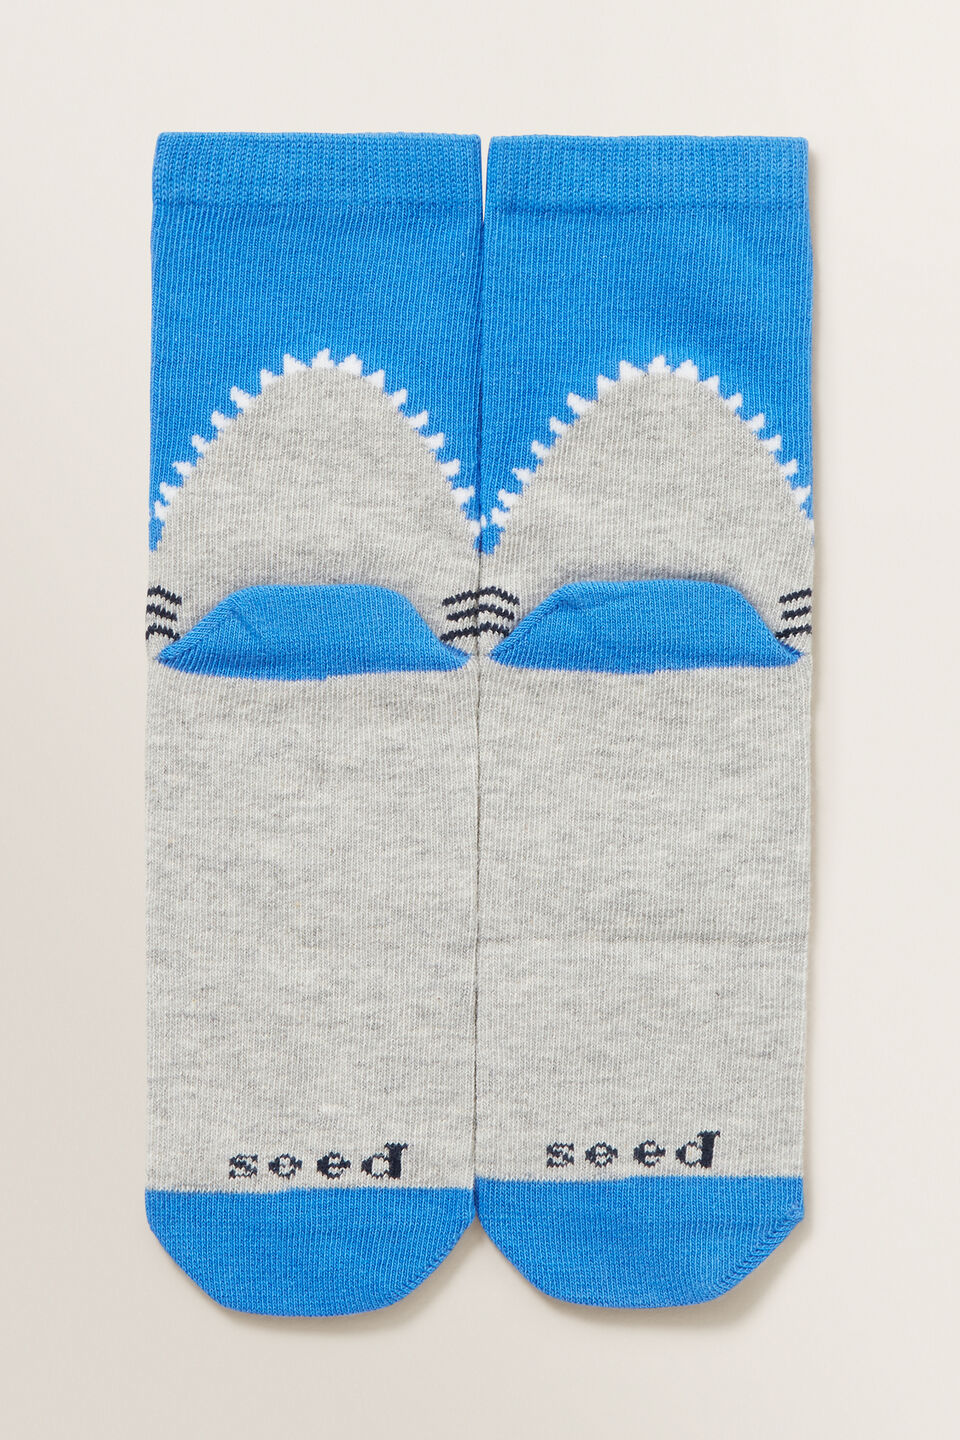 Shark Socks  